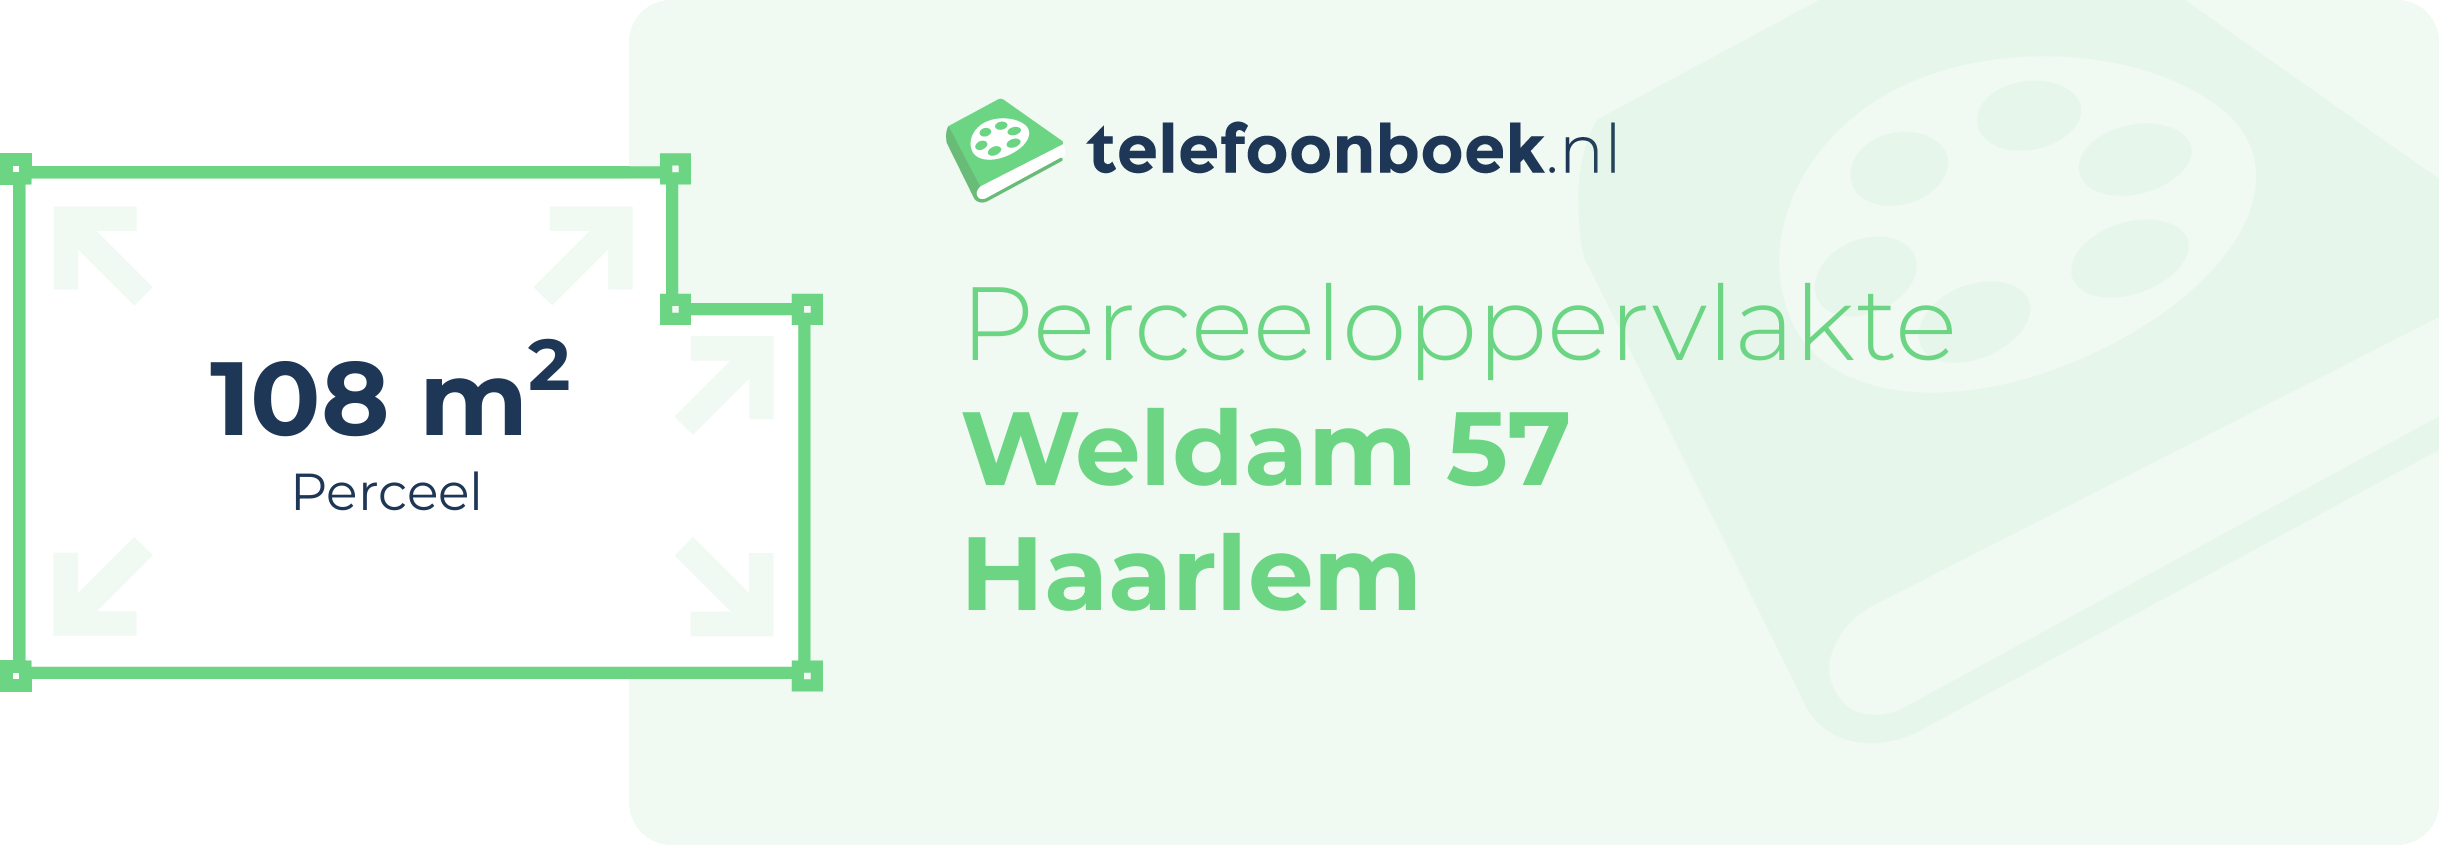 Perceeloppervlakte Weldam 57 Haarlem